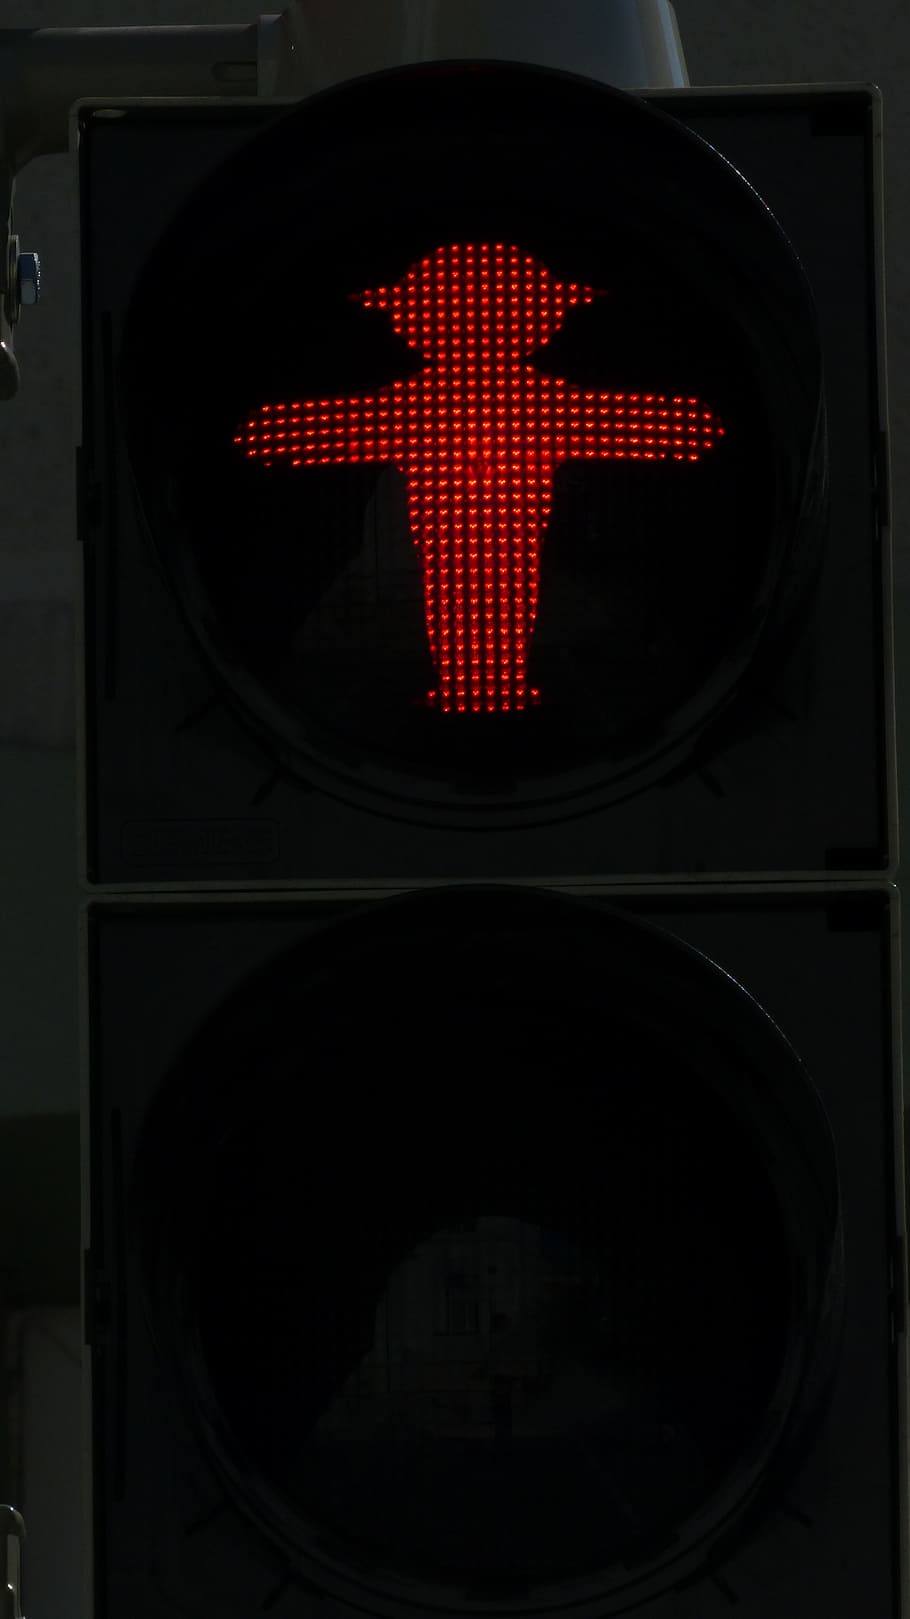 traffic lights, footbridge, little green man, traffic signal, red, males, light signal, foot gear males, road sign, road